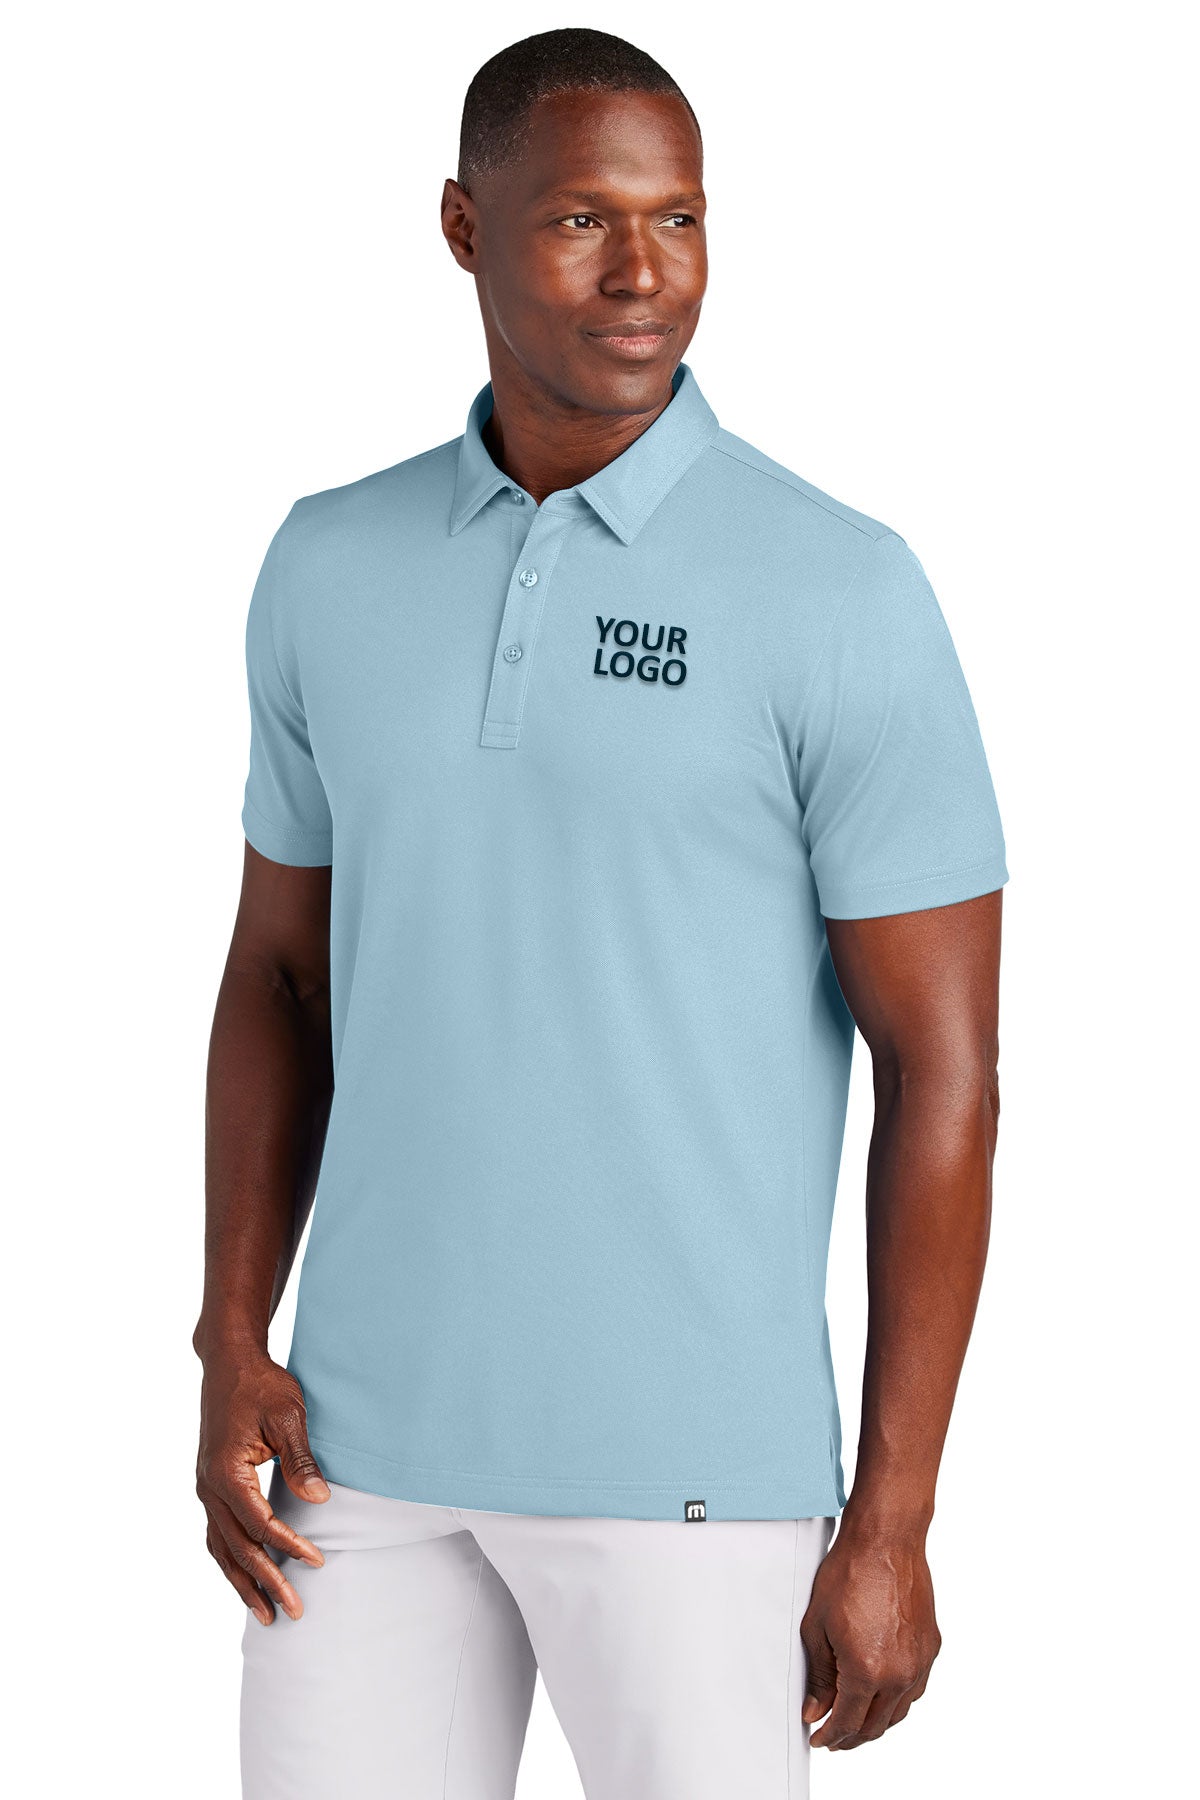 TravisMathew Light Denim Blue TM1MAA370 custom dri fit polo shirts